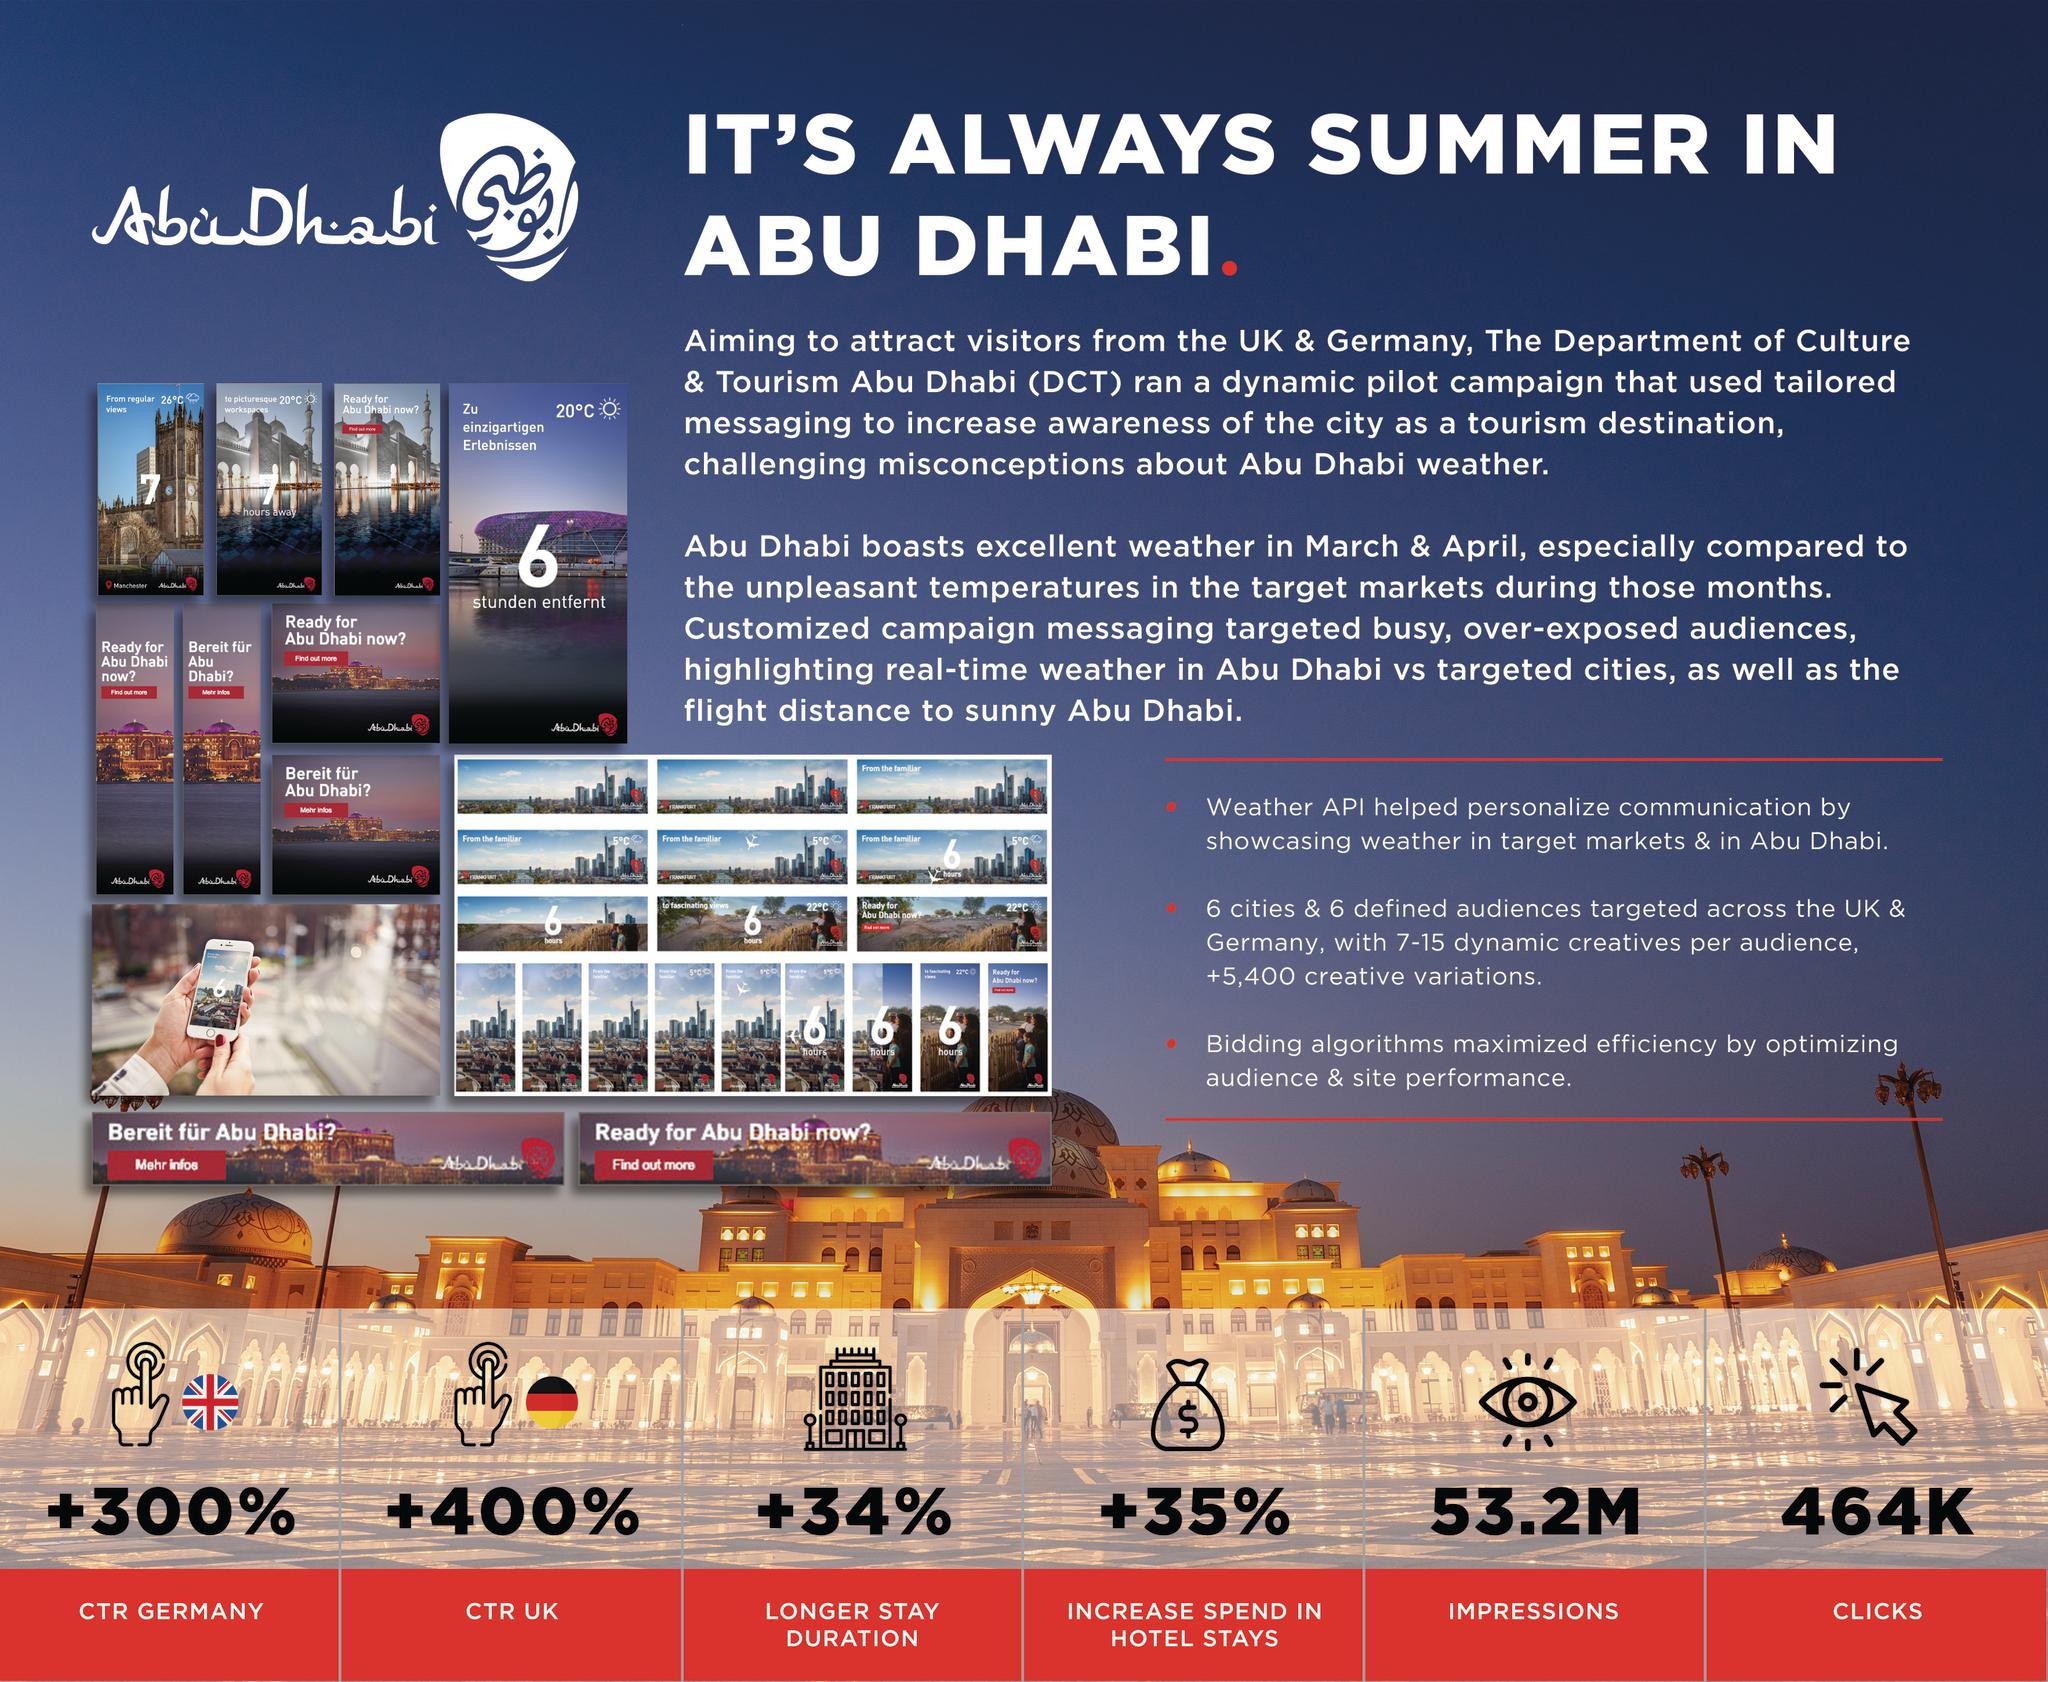 IT'S ALWAYS SUMMER IN ABU DHABI